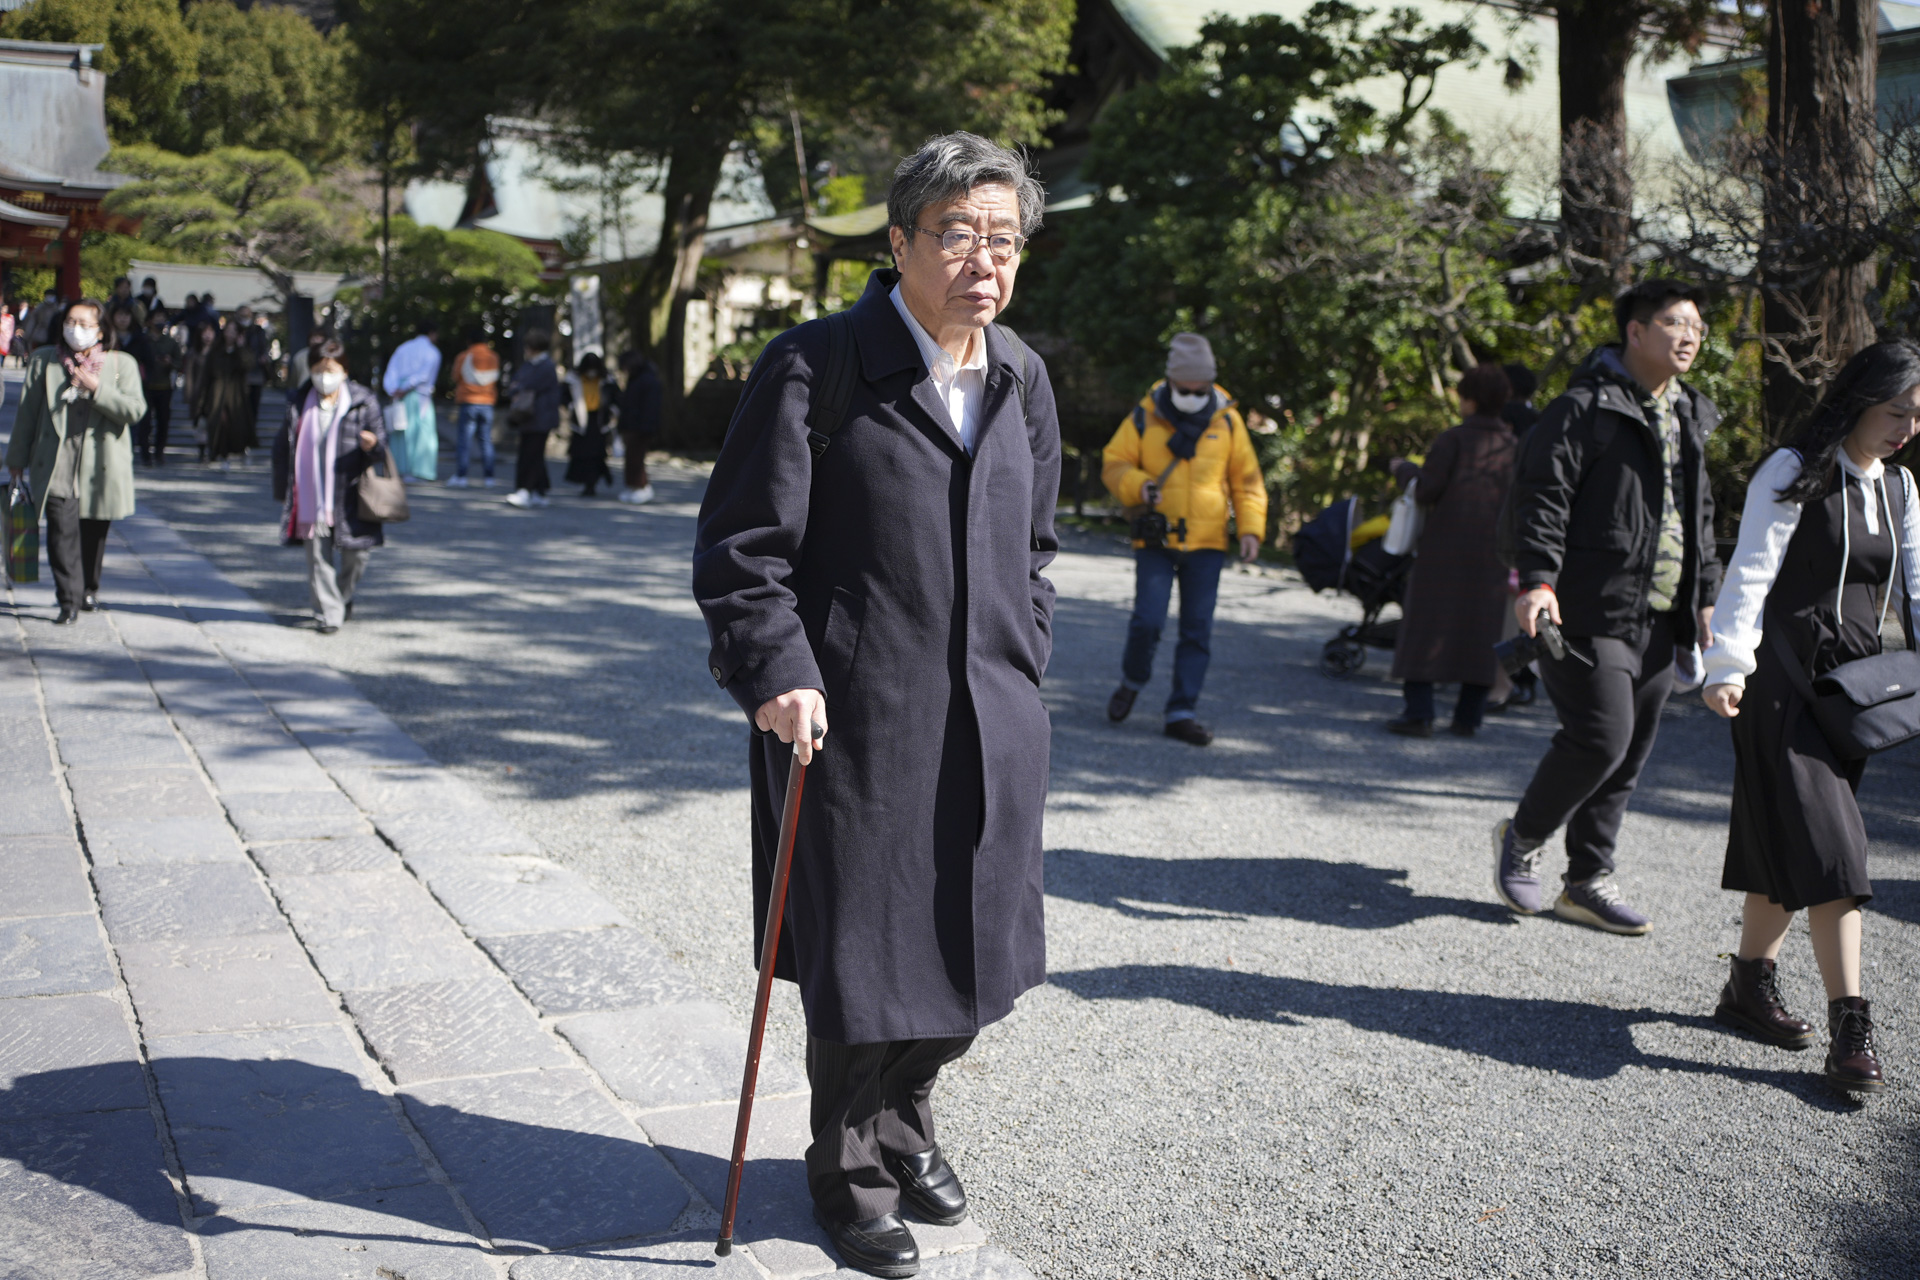 Street photo of elderly man with walking stick in Japan